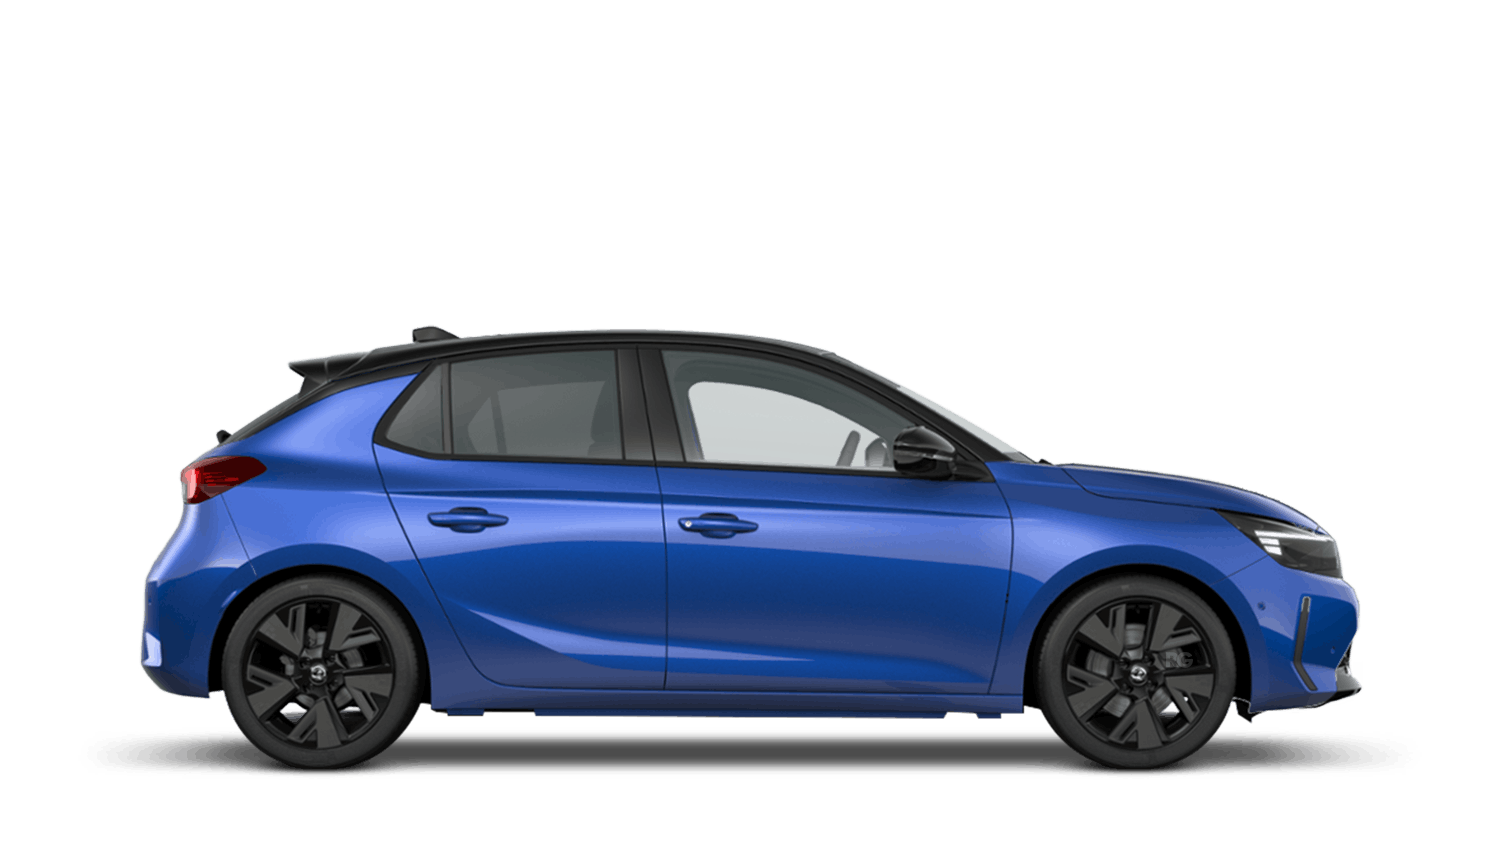 Cobalt Blue (Metallic) All-New Vauxhall Corsa Electric